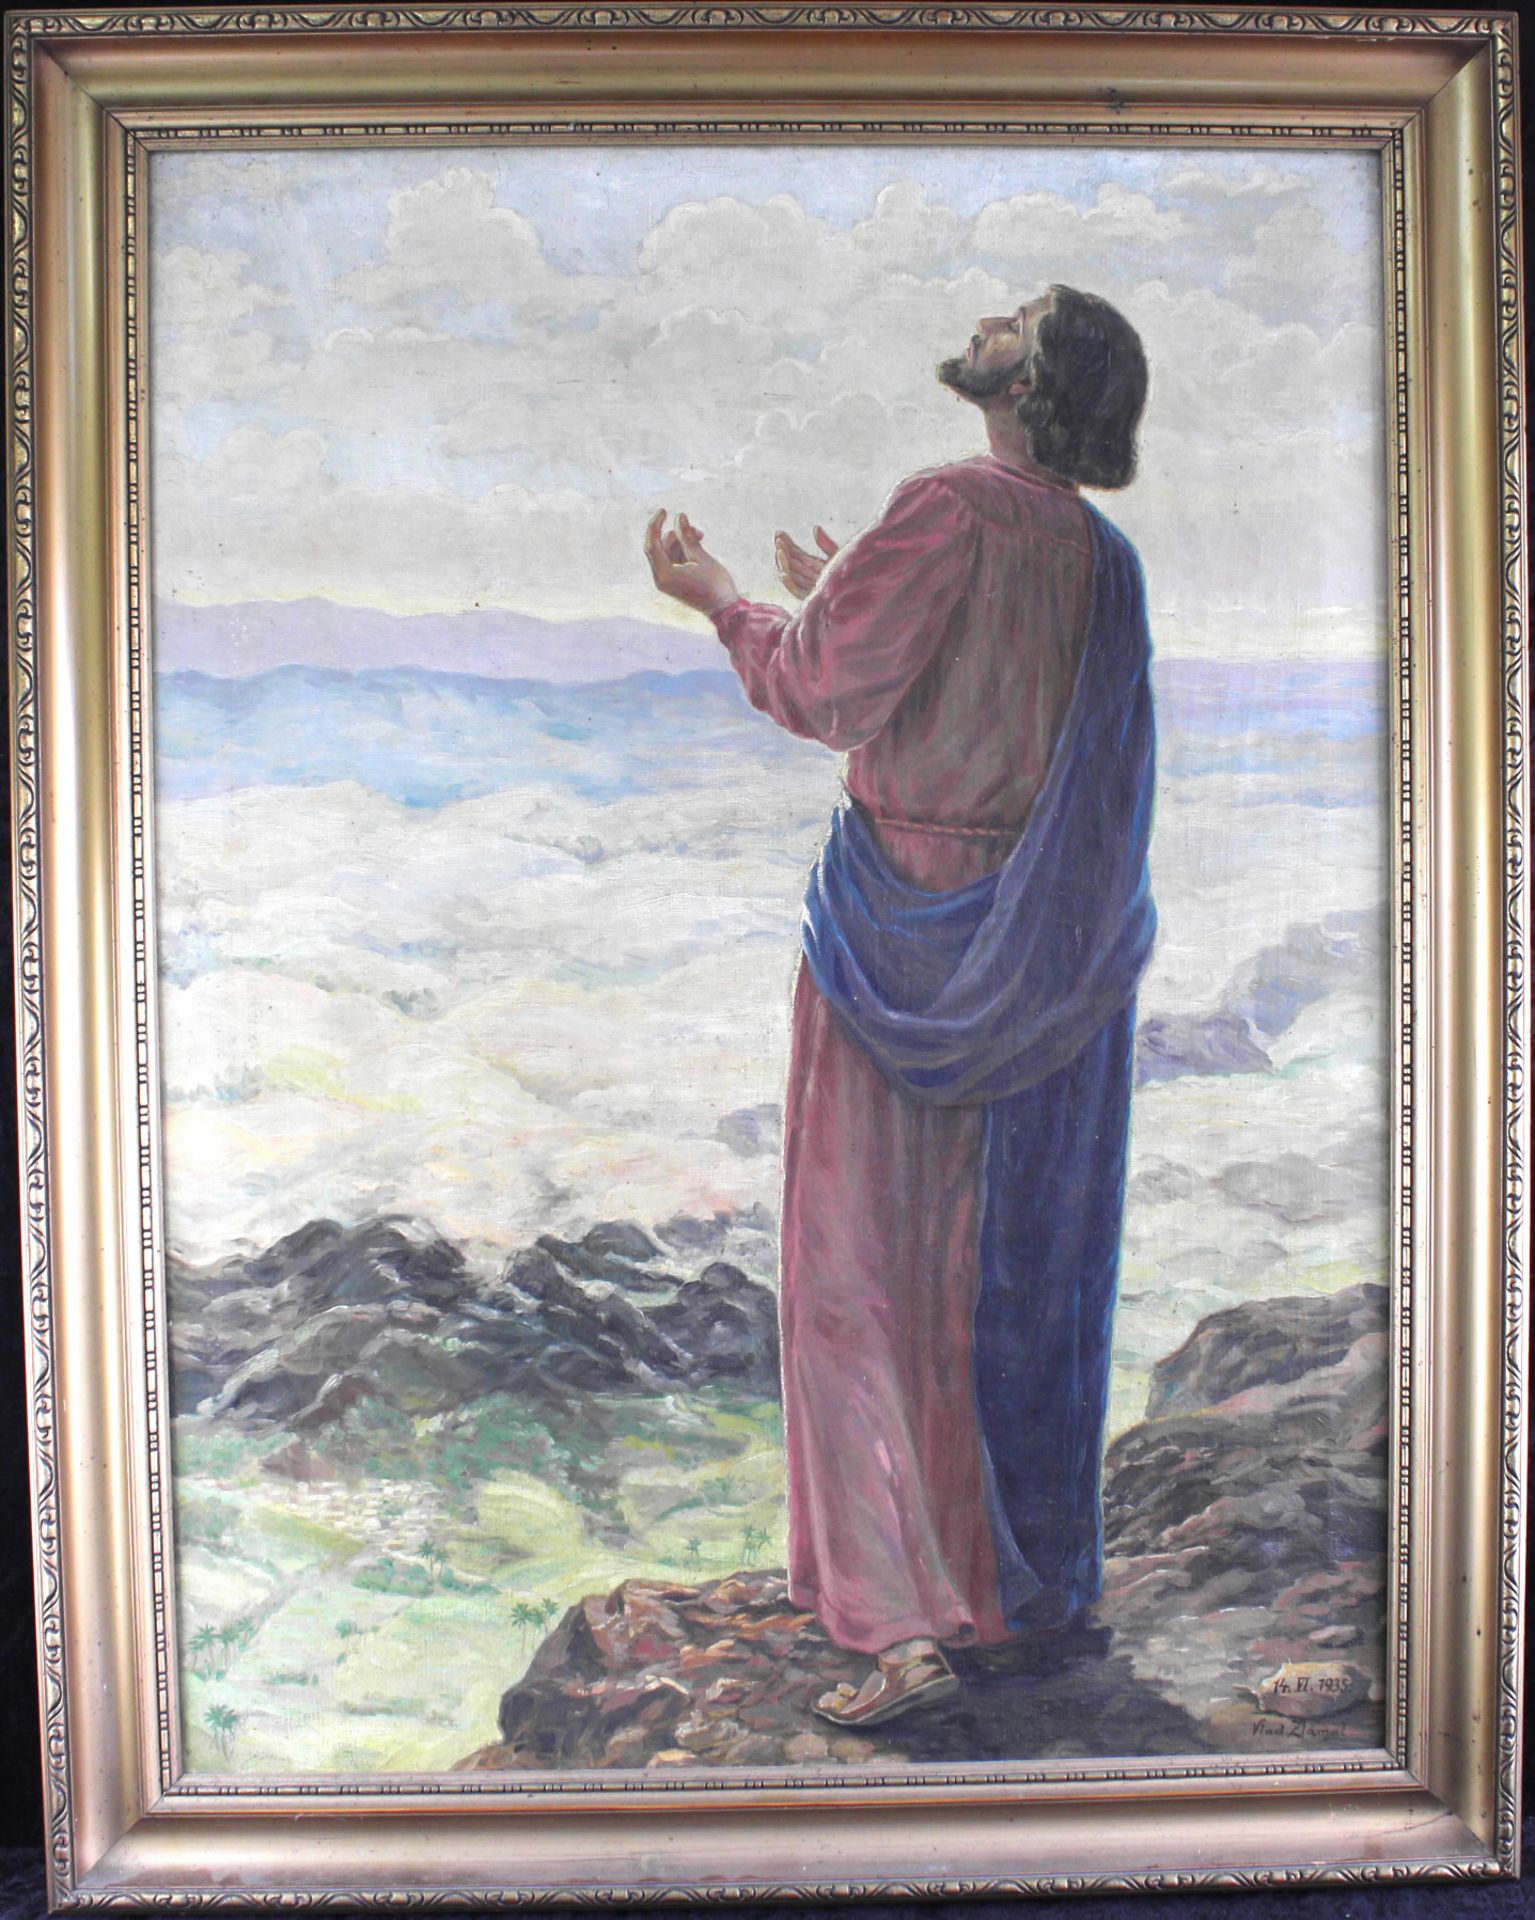 Vladimir Zlamal, Tschechei 20.Jh. "Jesus auf dem Berg" Öl/Leinwand, sig. u. dat. 1935, 106 x 80 cm